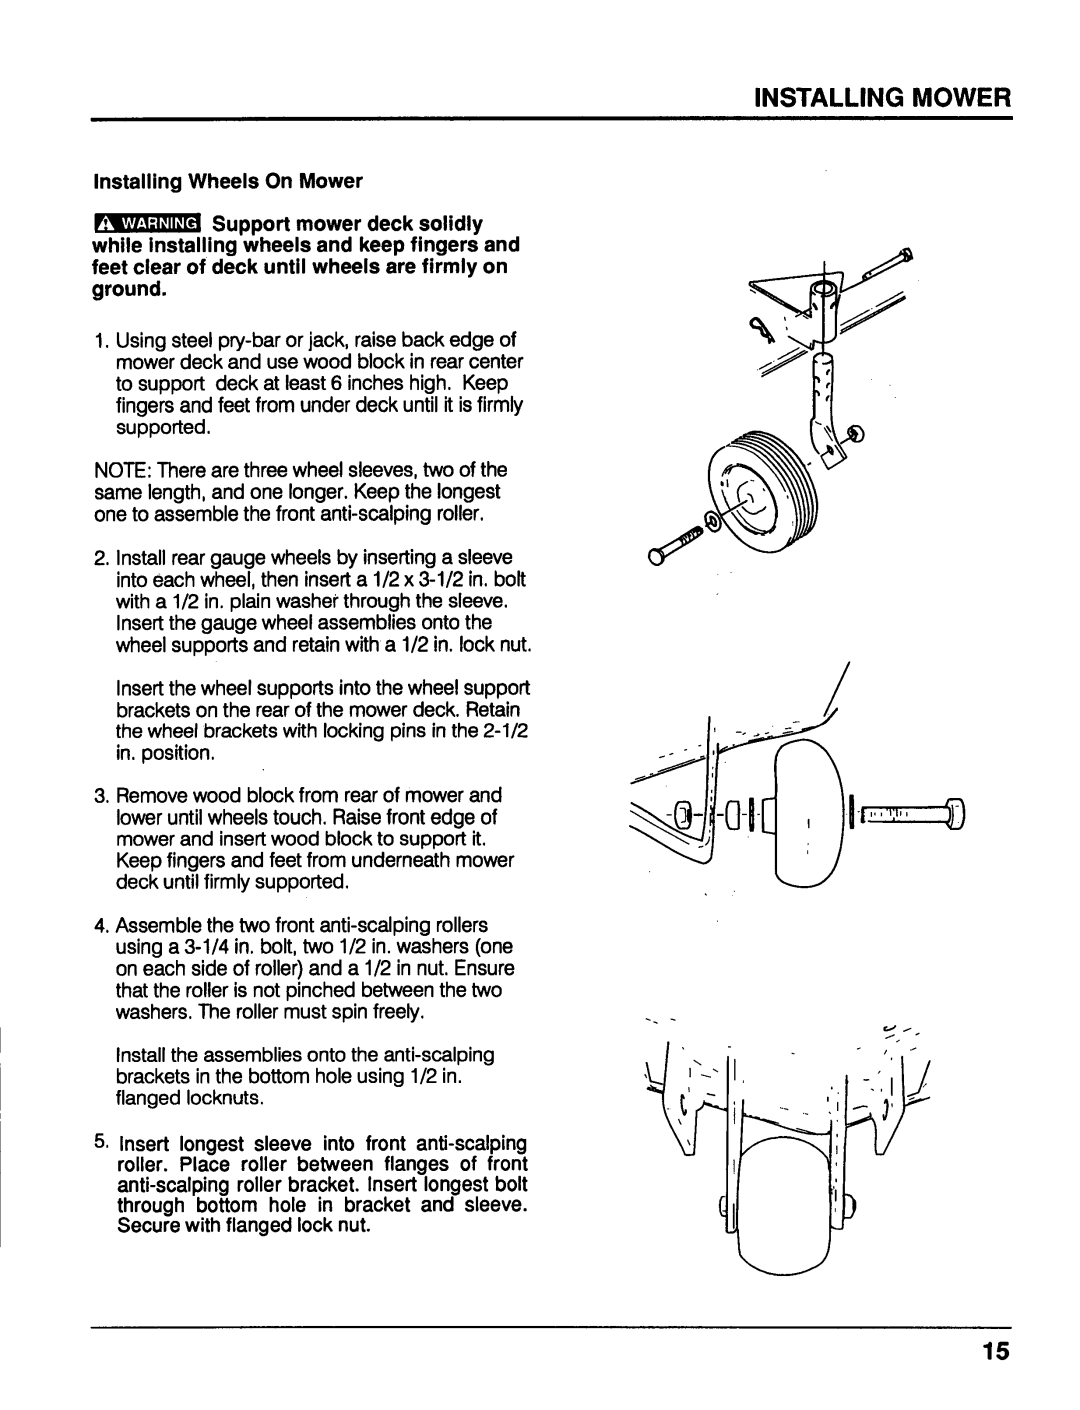 Honda Power Equipment MM52 manual installing Wheels On Mower t, Installing Mower 